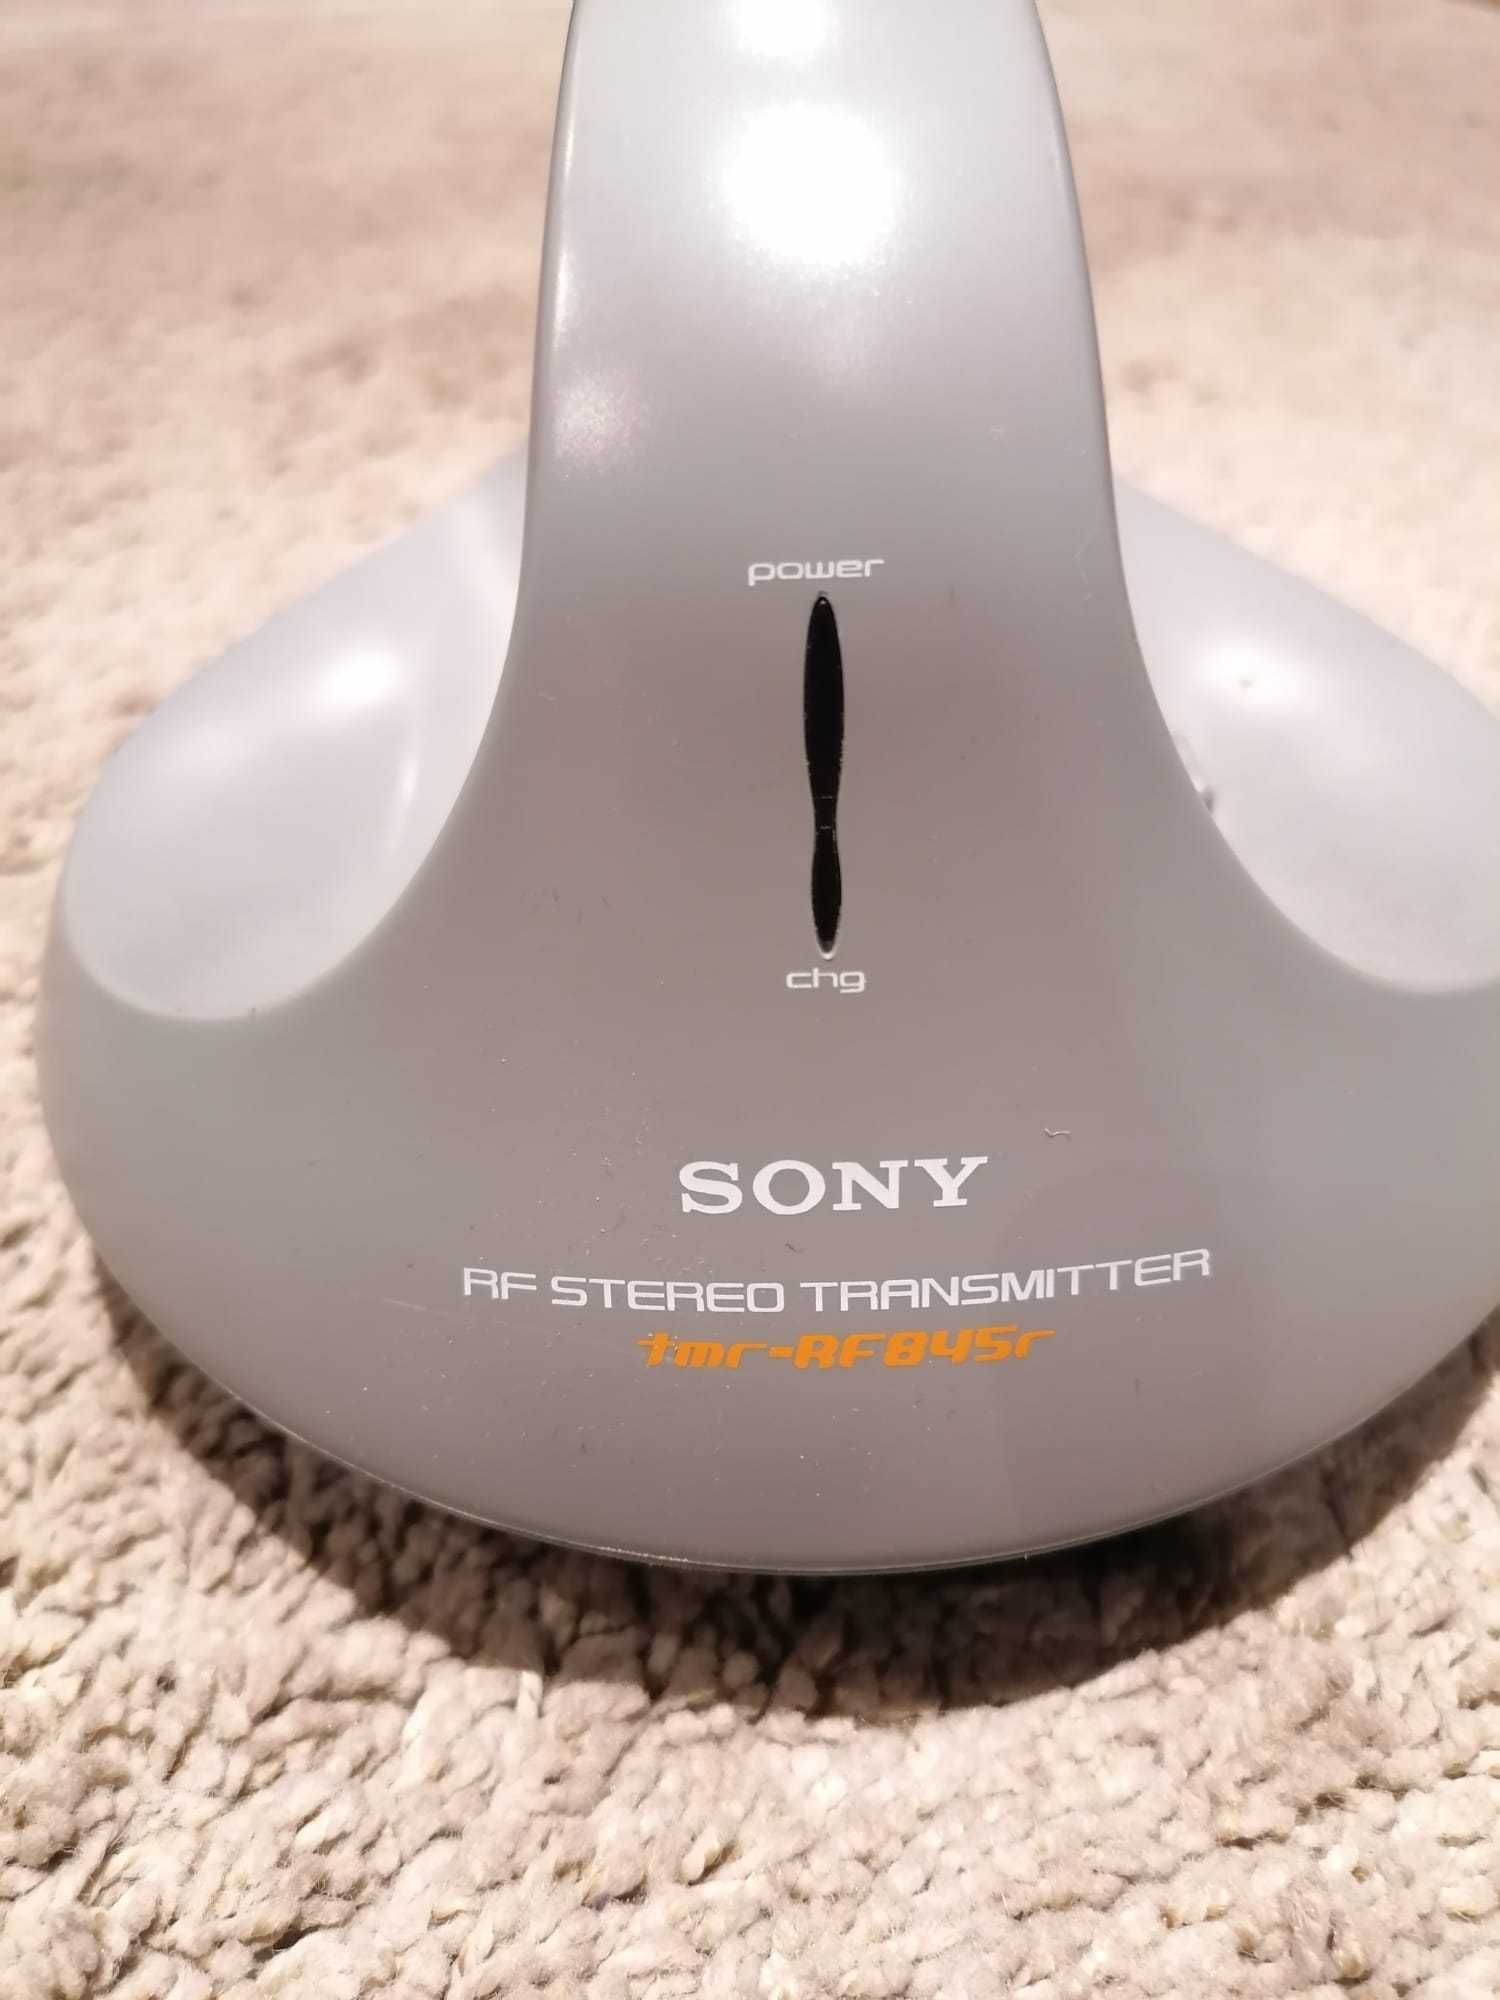 Sony Wireless Stereo Headphones